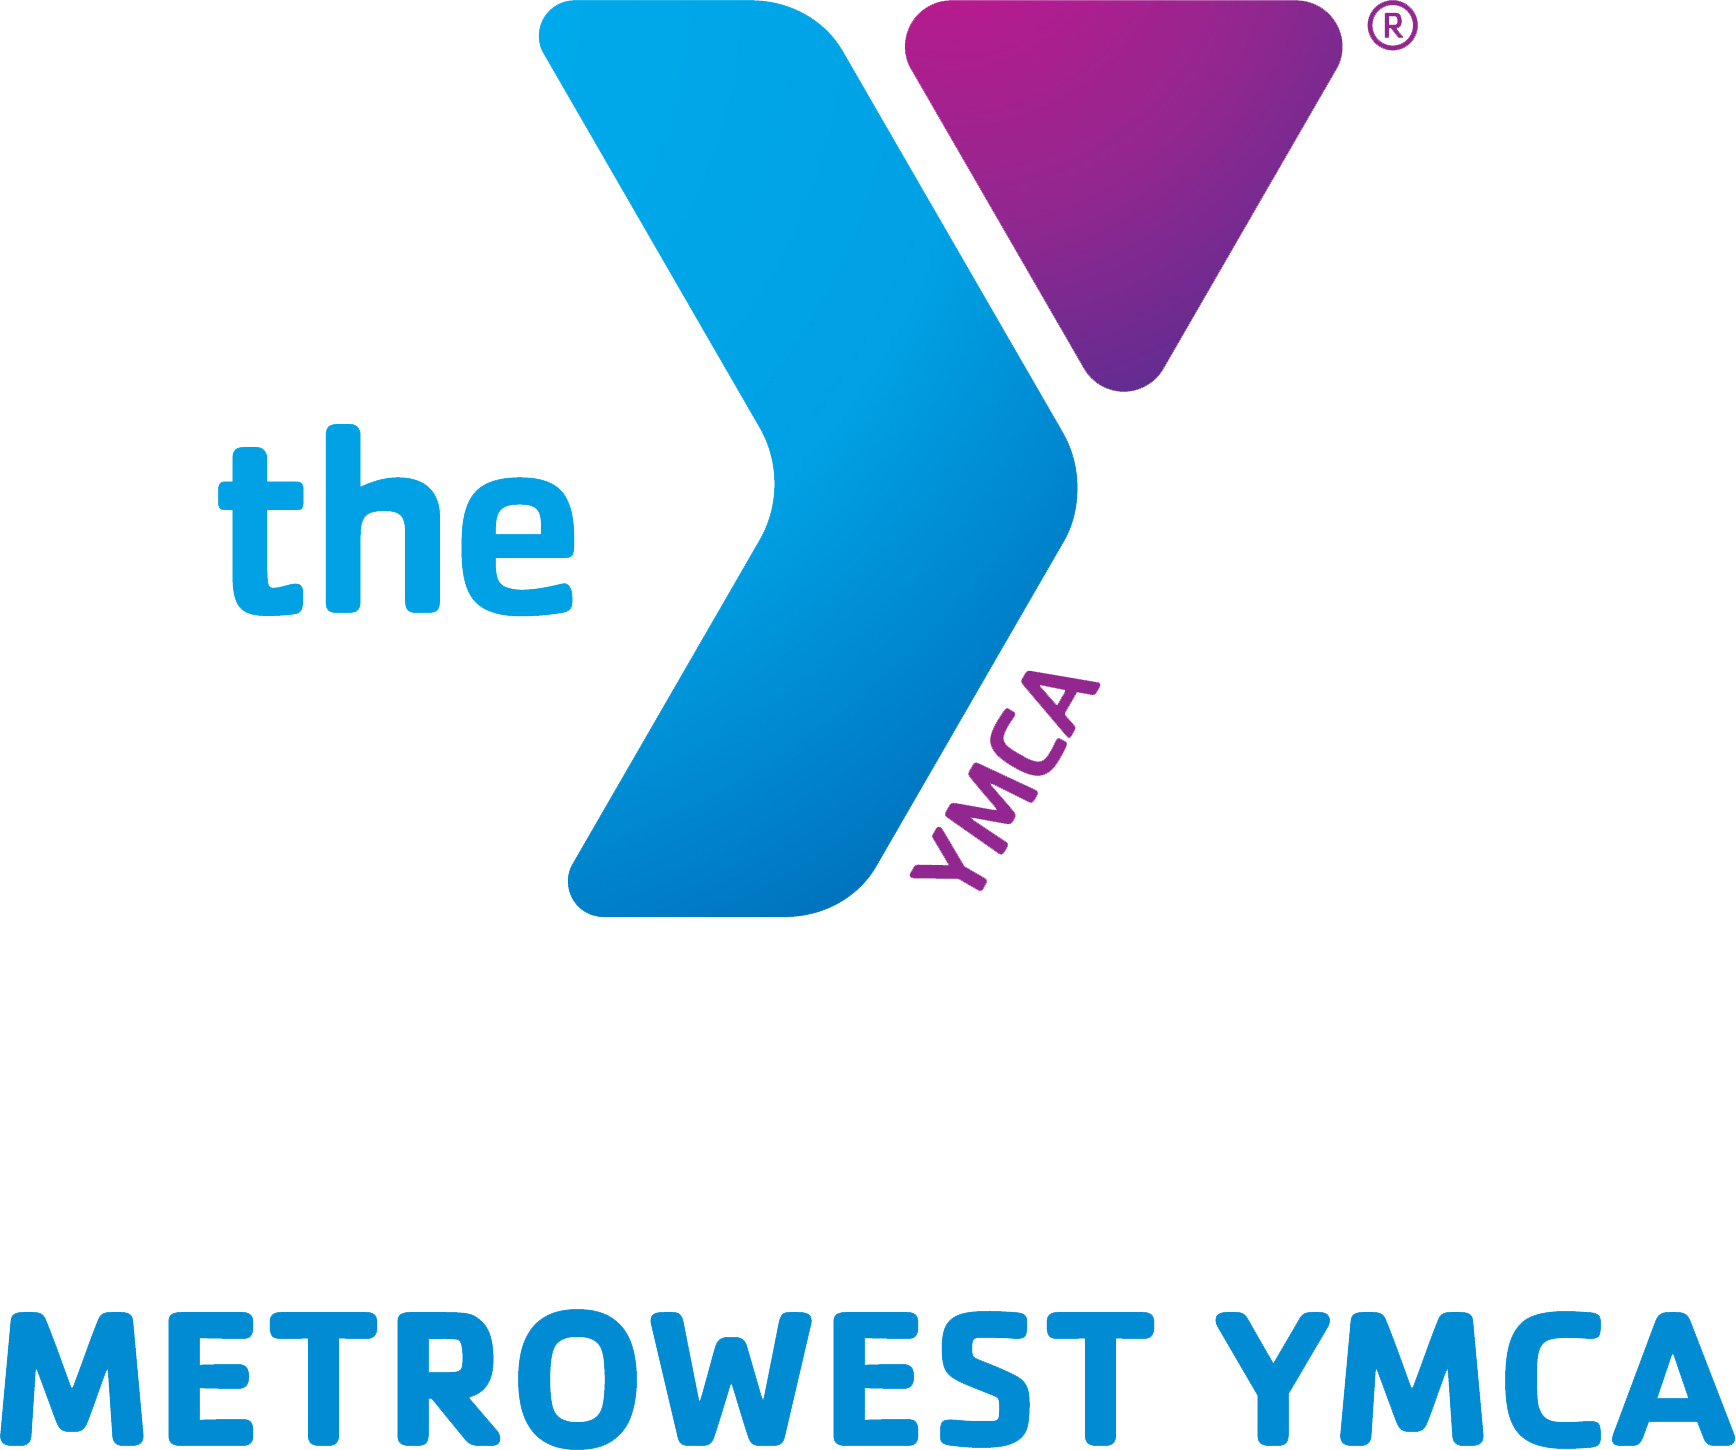 Metrowest YMCA logo